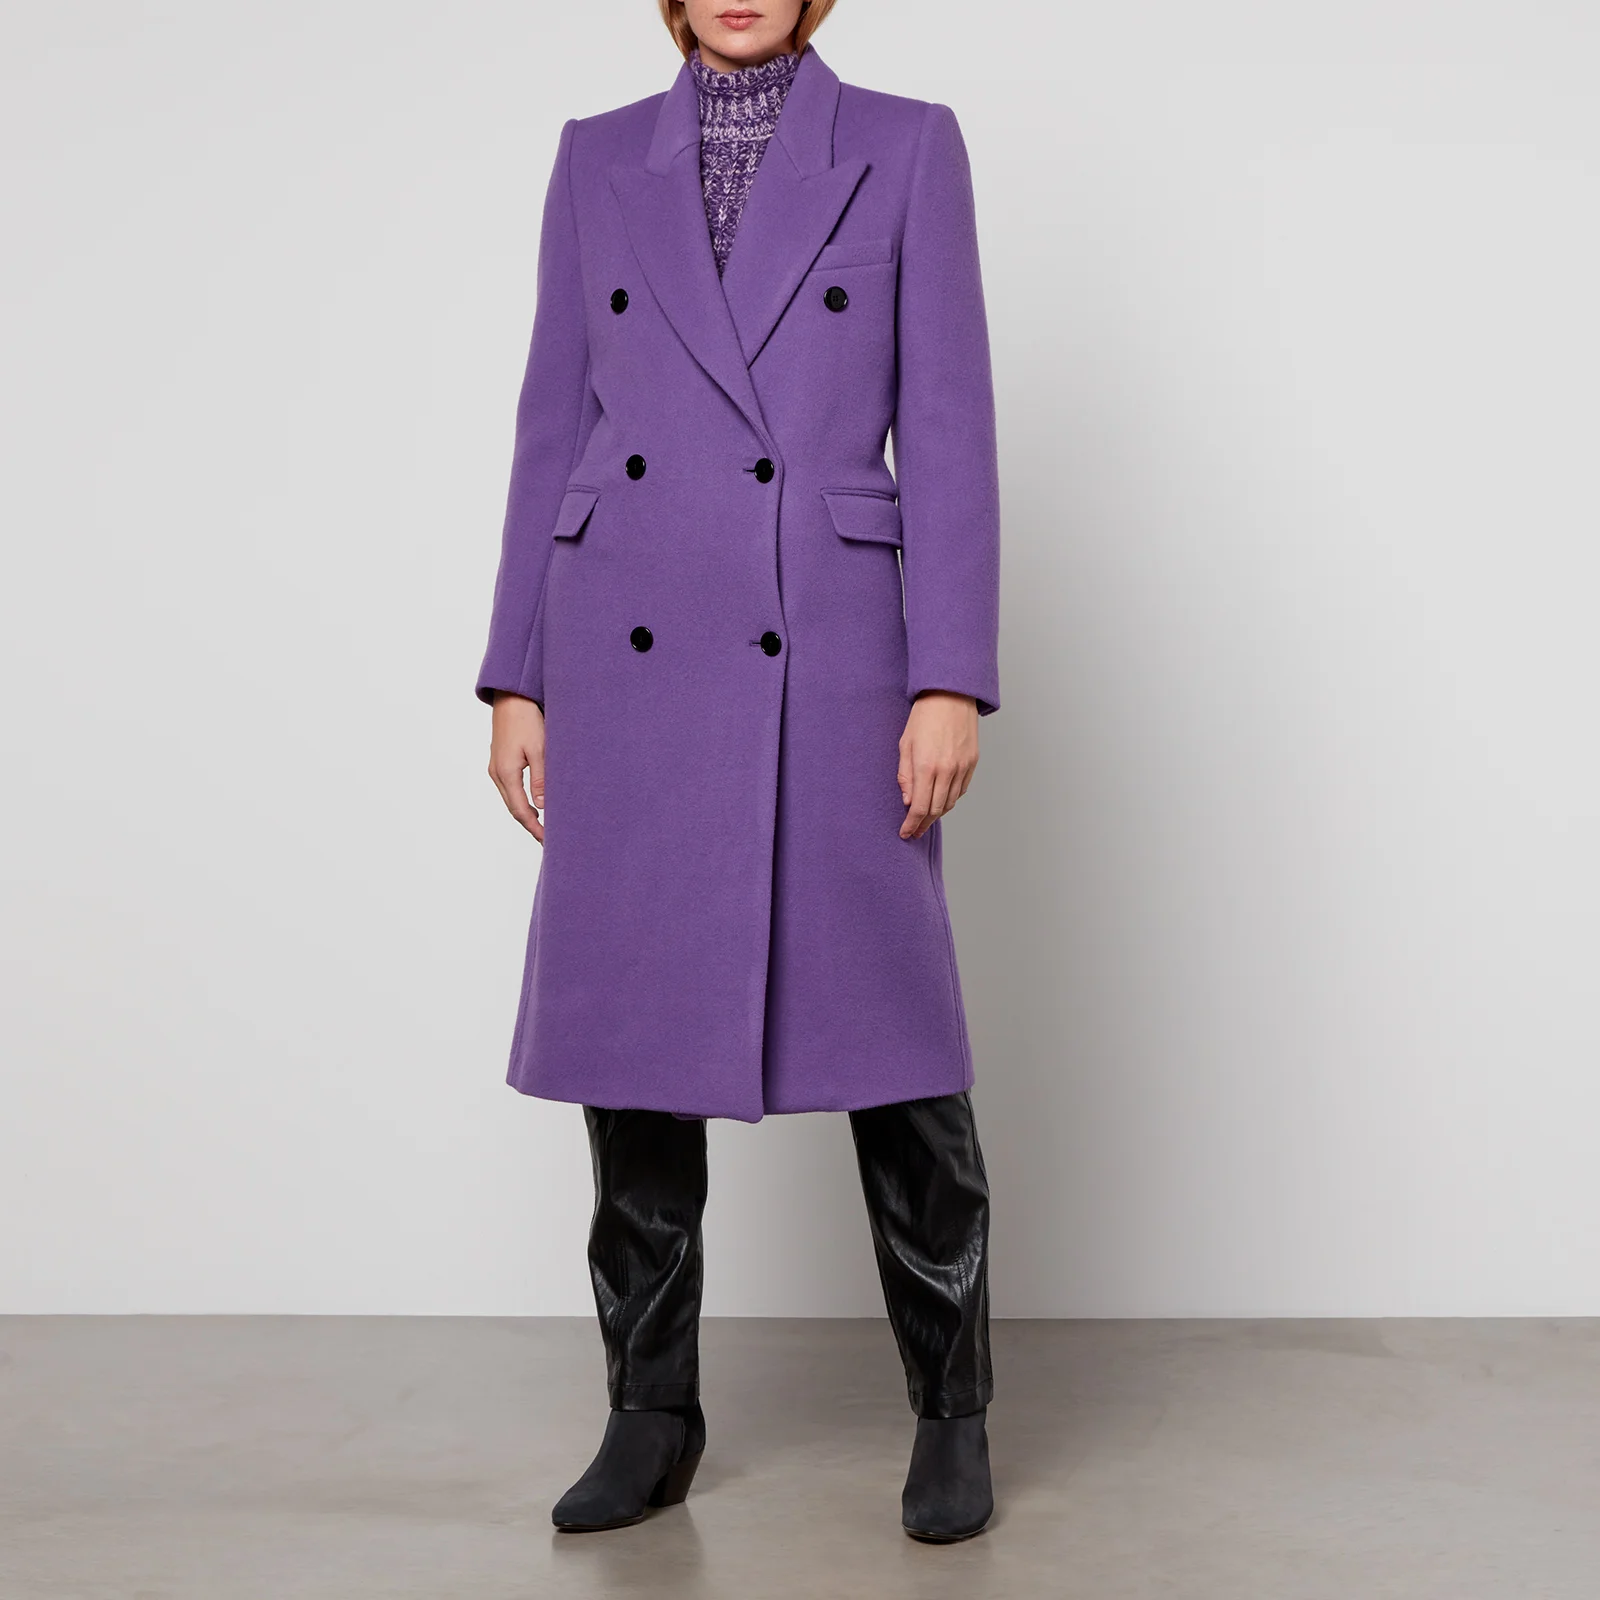 Isabel Marant Enarryli Wool-Blend Double-Breasted Coat Image 1